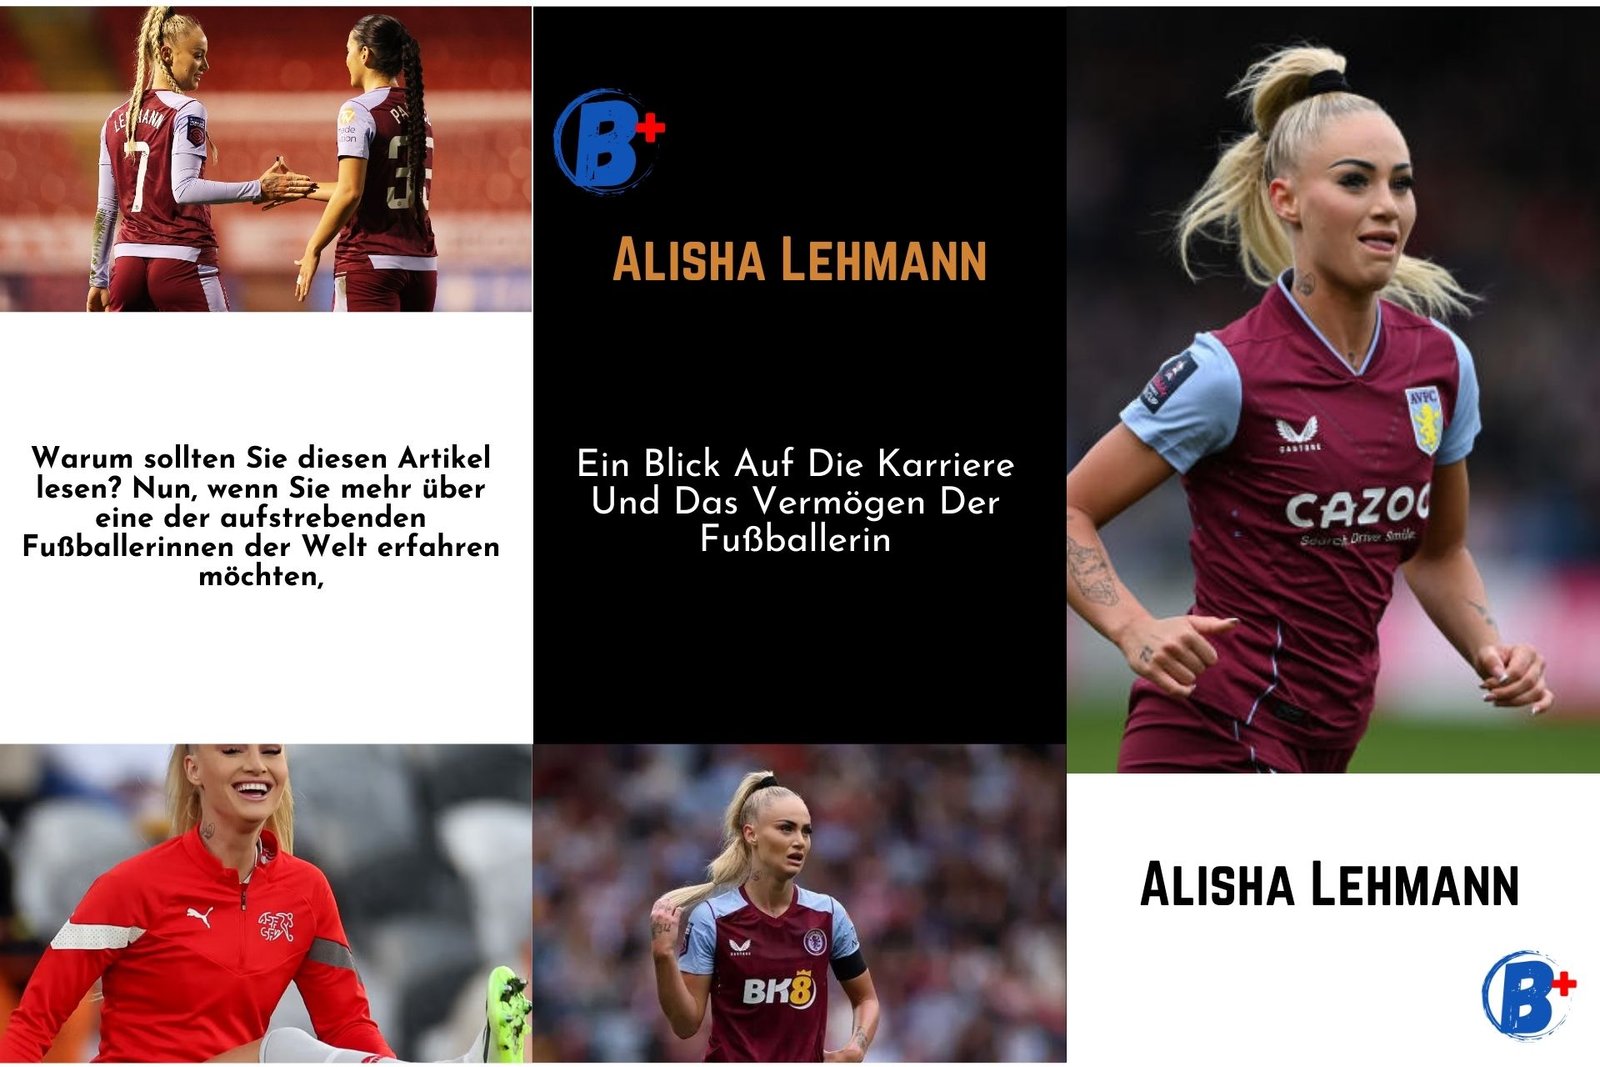 Alisha Lehmann